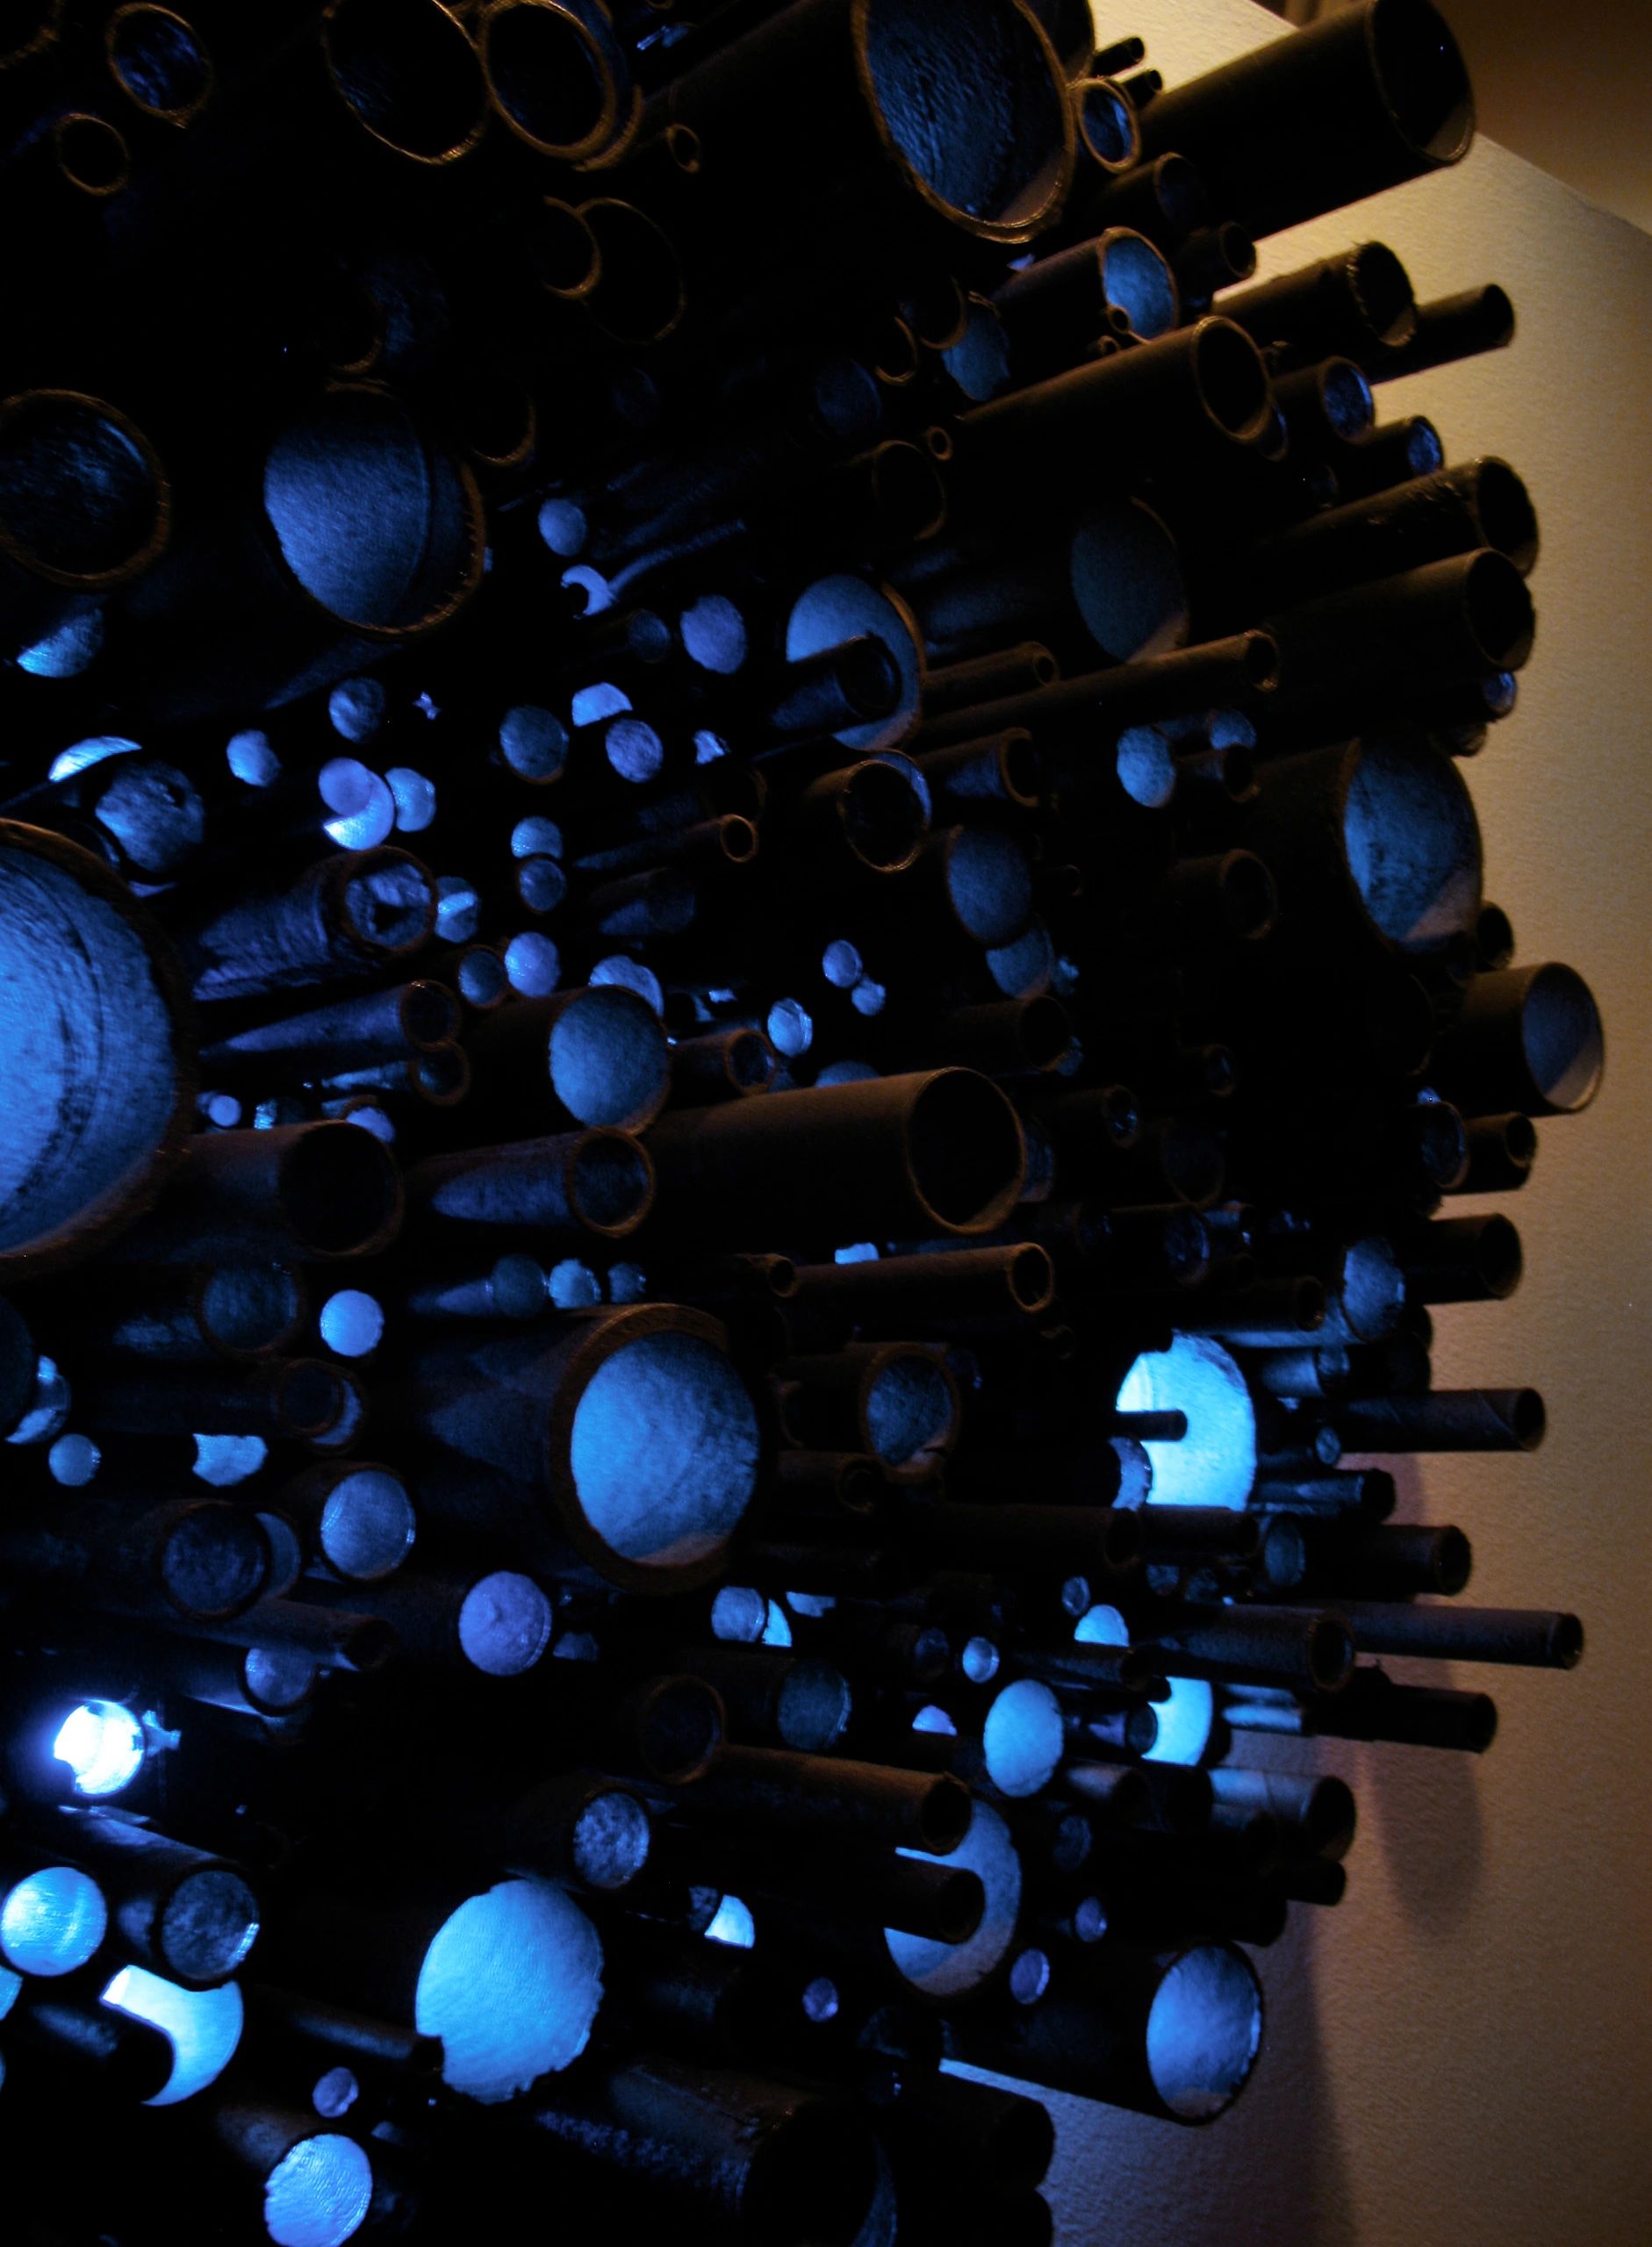 "Galaxy" is a wall sculpture made of firecracker tubes and light.